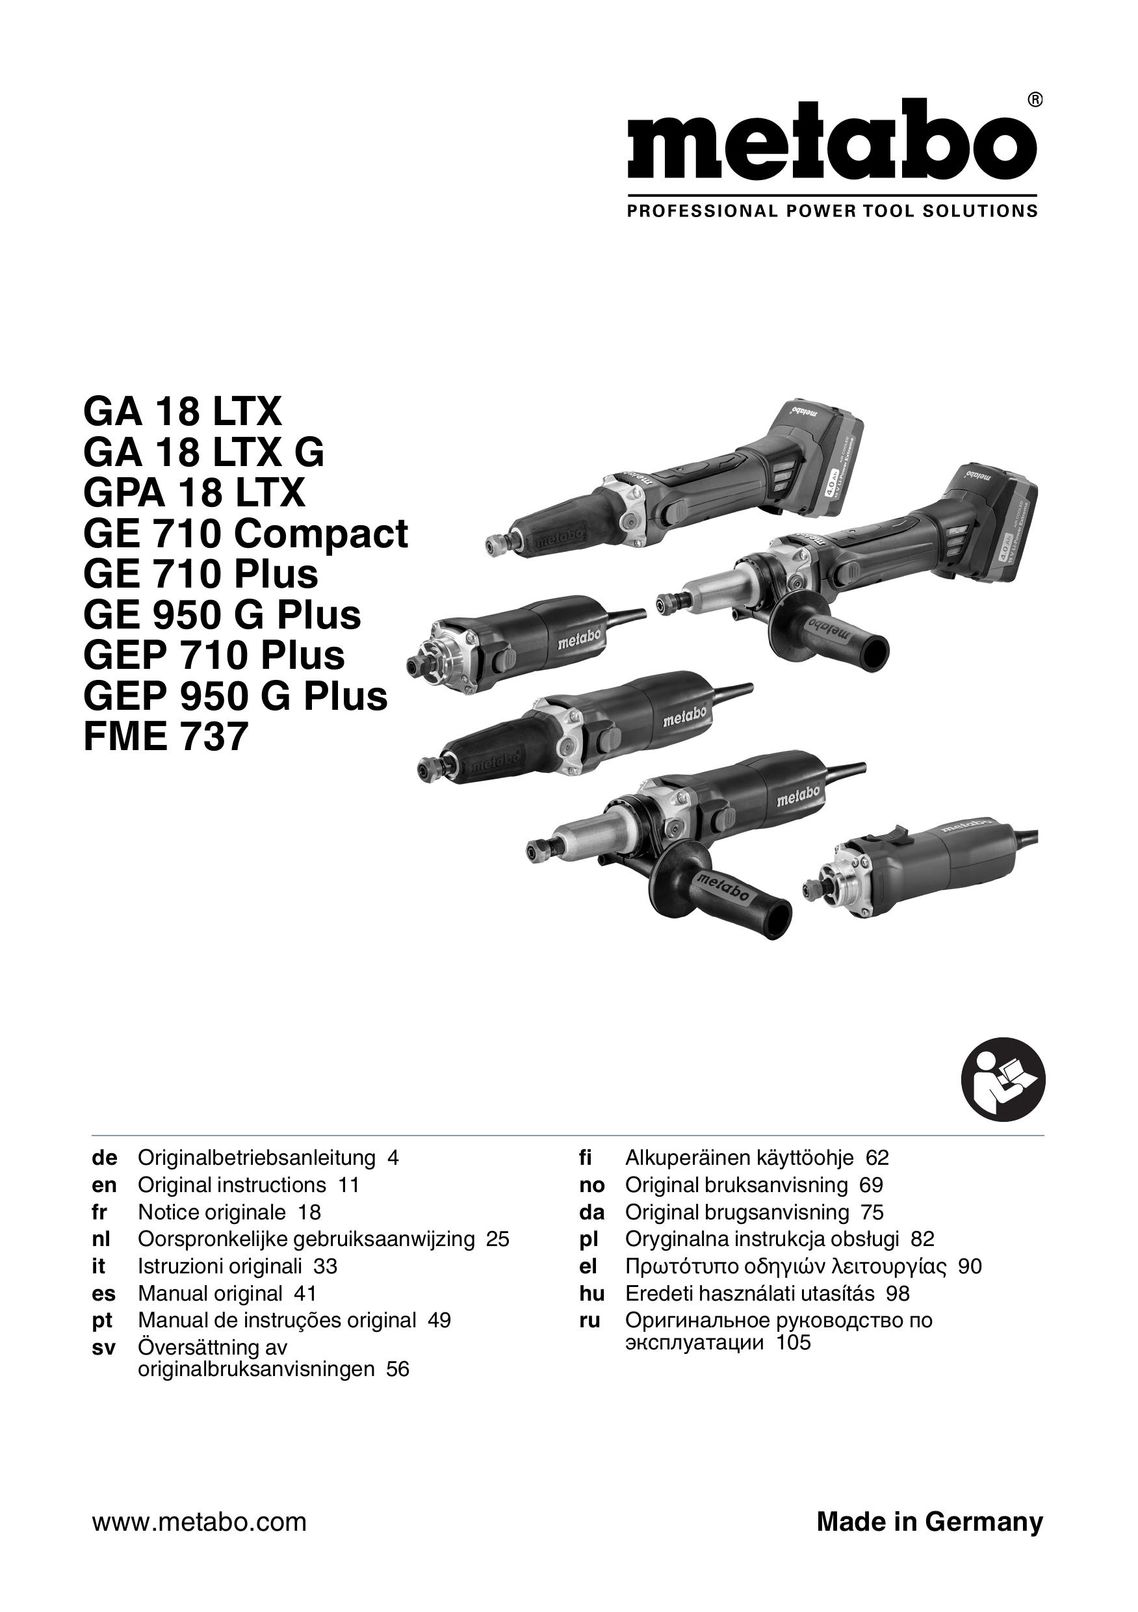 Metabo GA 18 LTX BARE Grinder User Manual